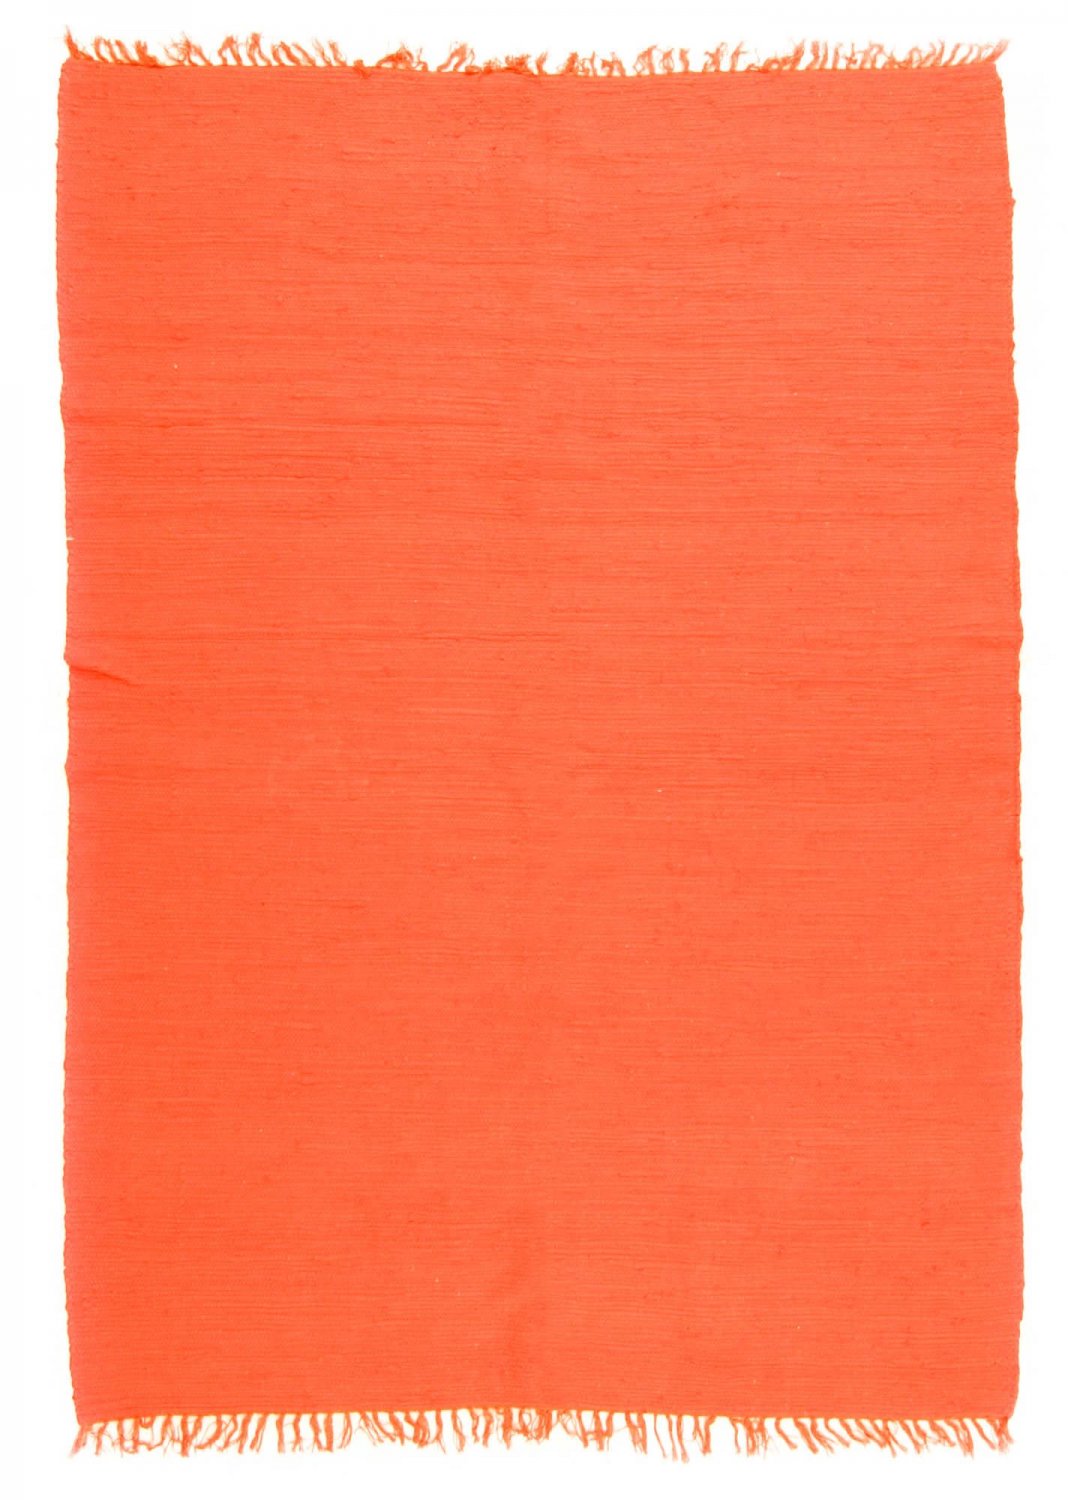 Kludetæppe - Silje (orange)